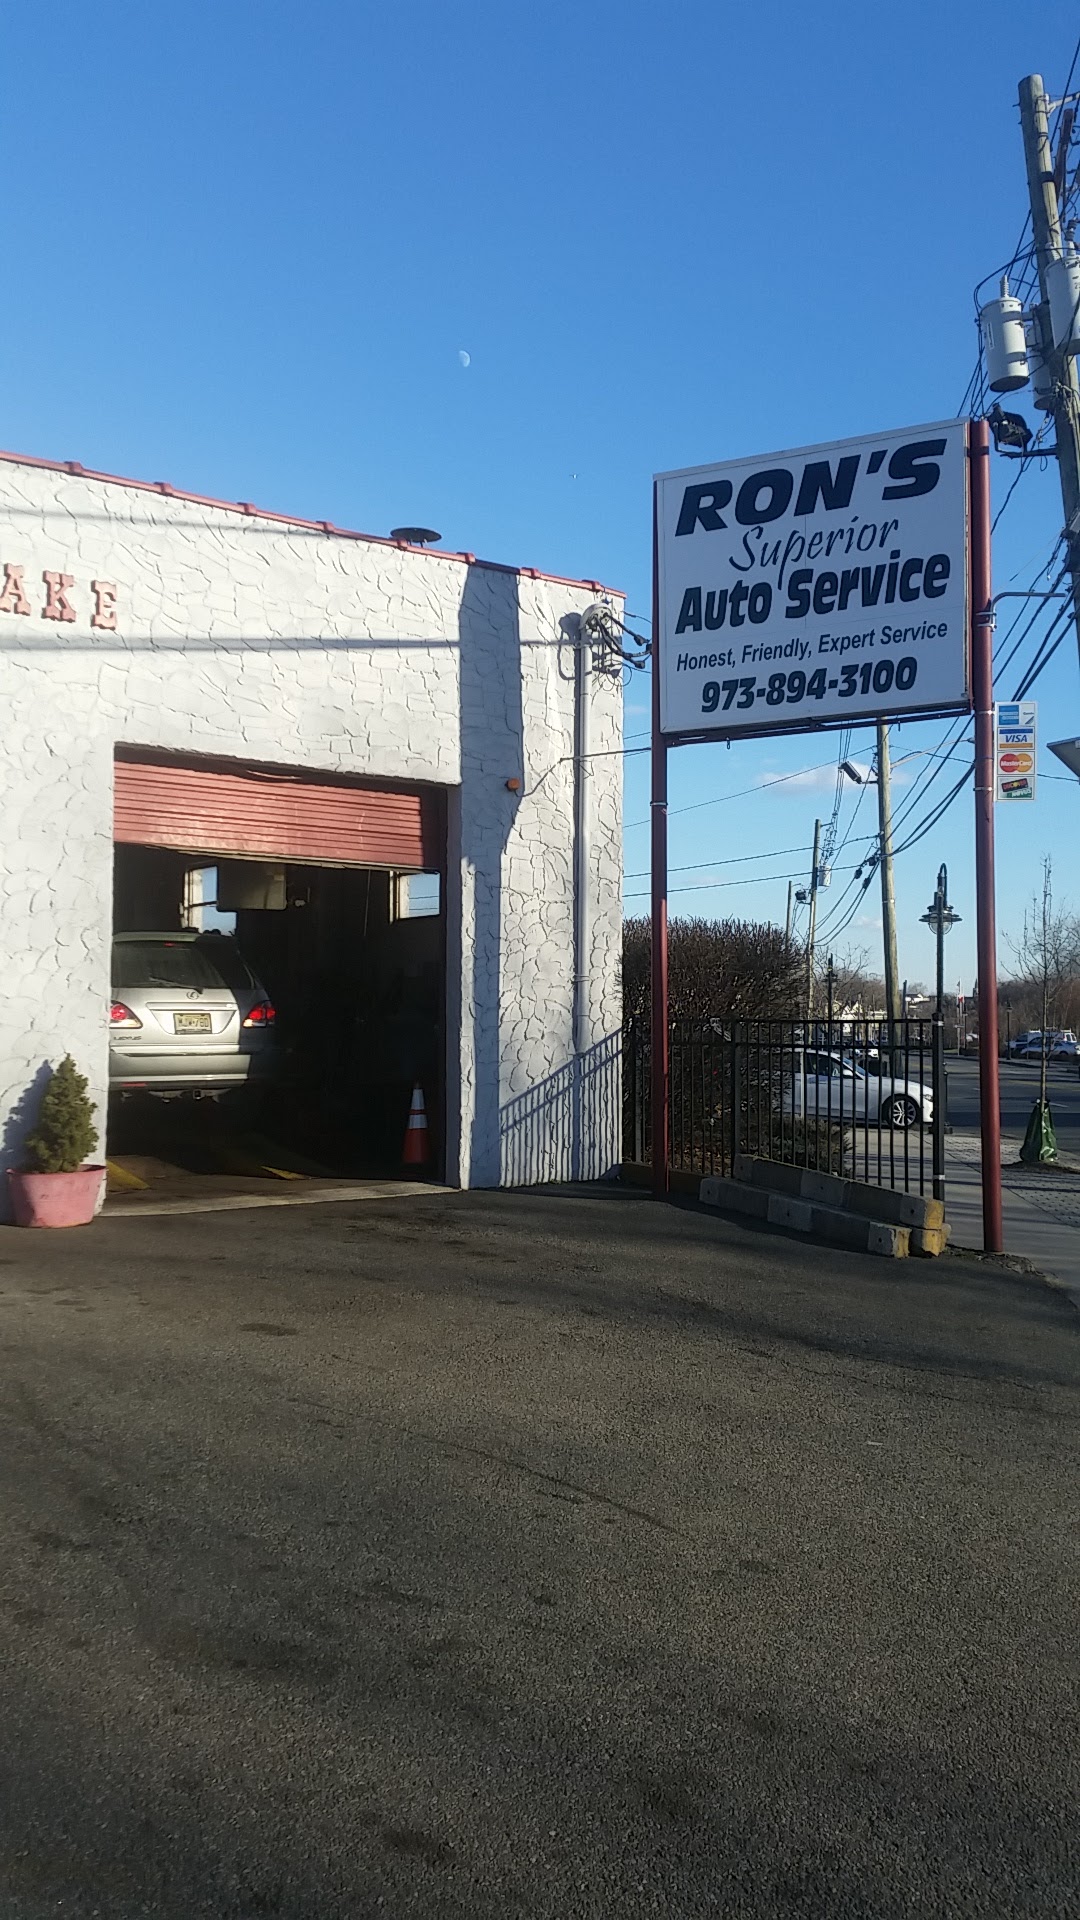 Rons Superior Auto Service